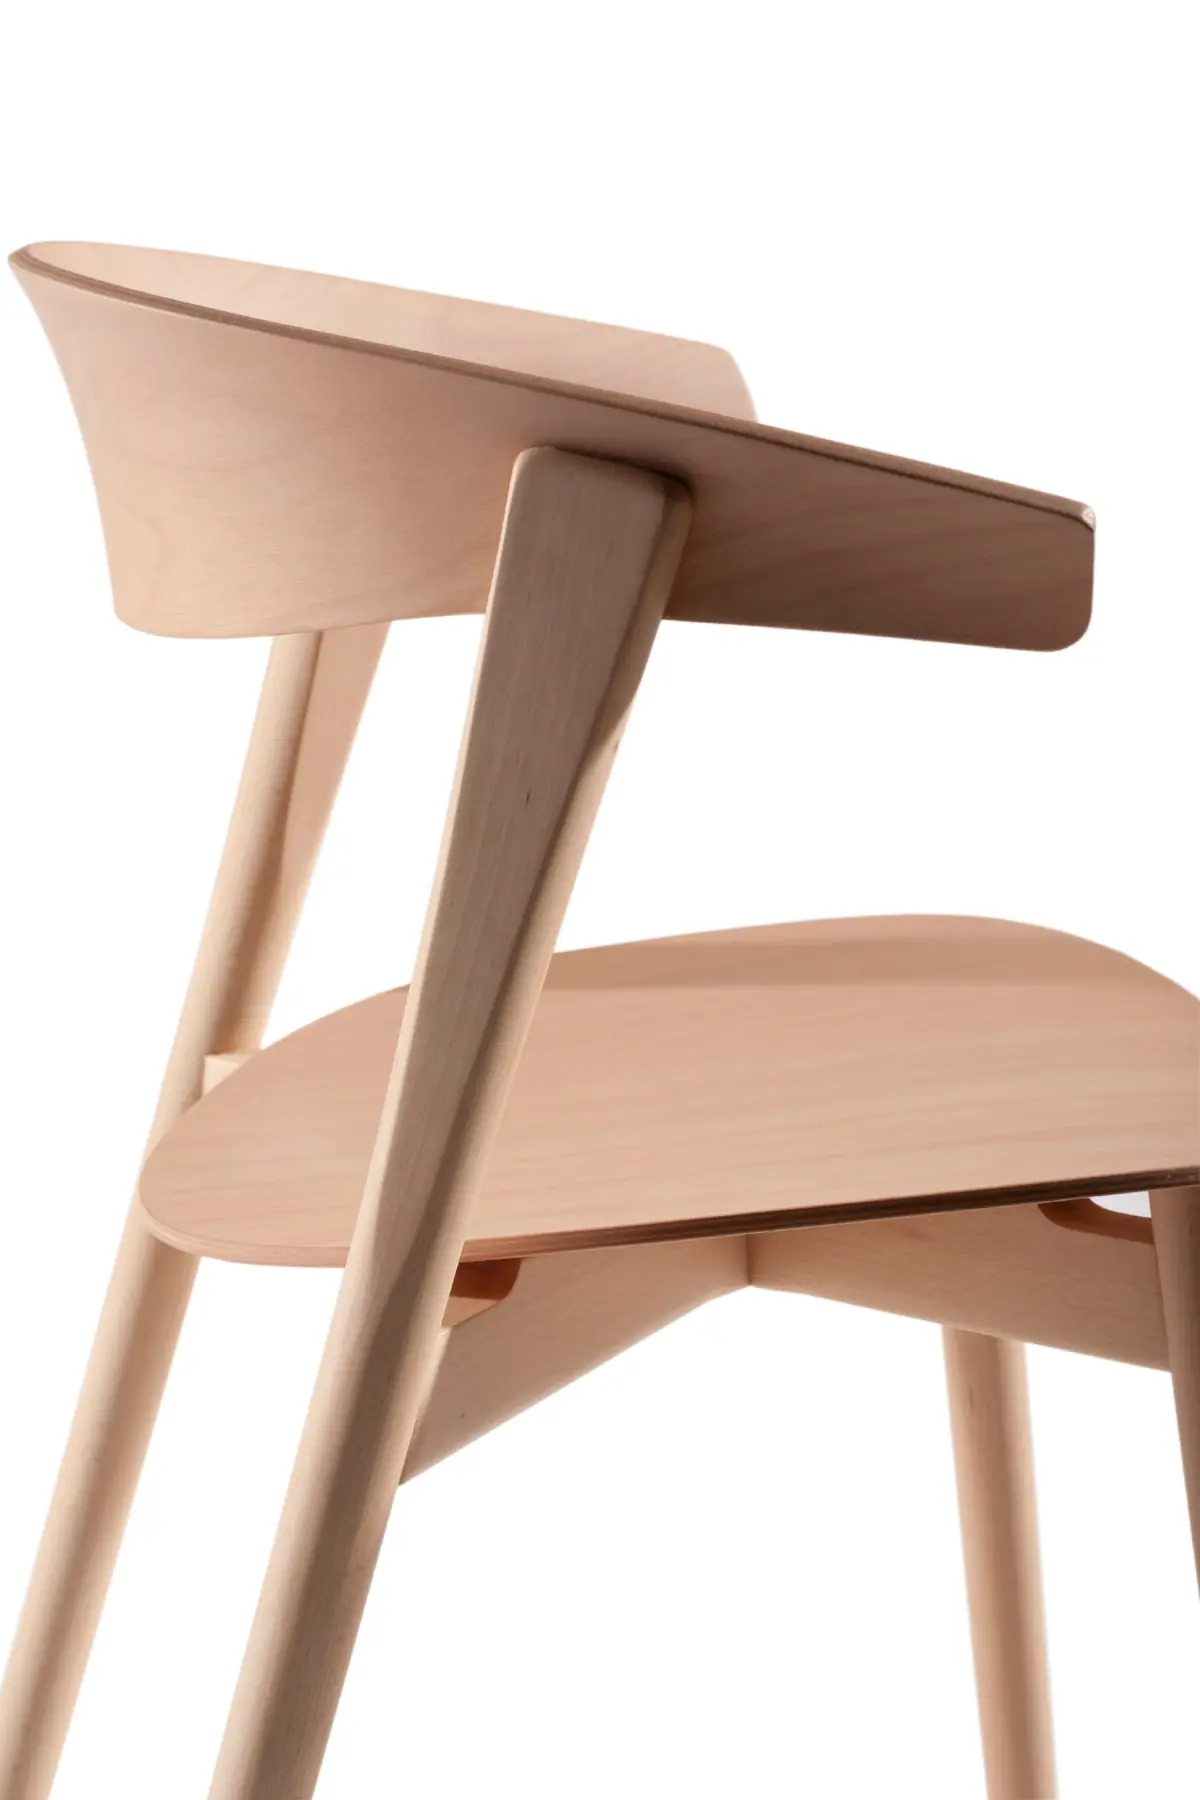 35157-35155-nix-chairs